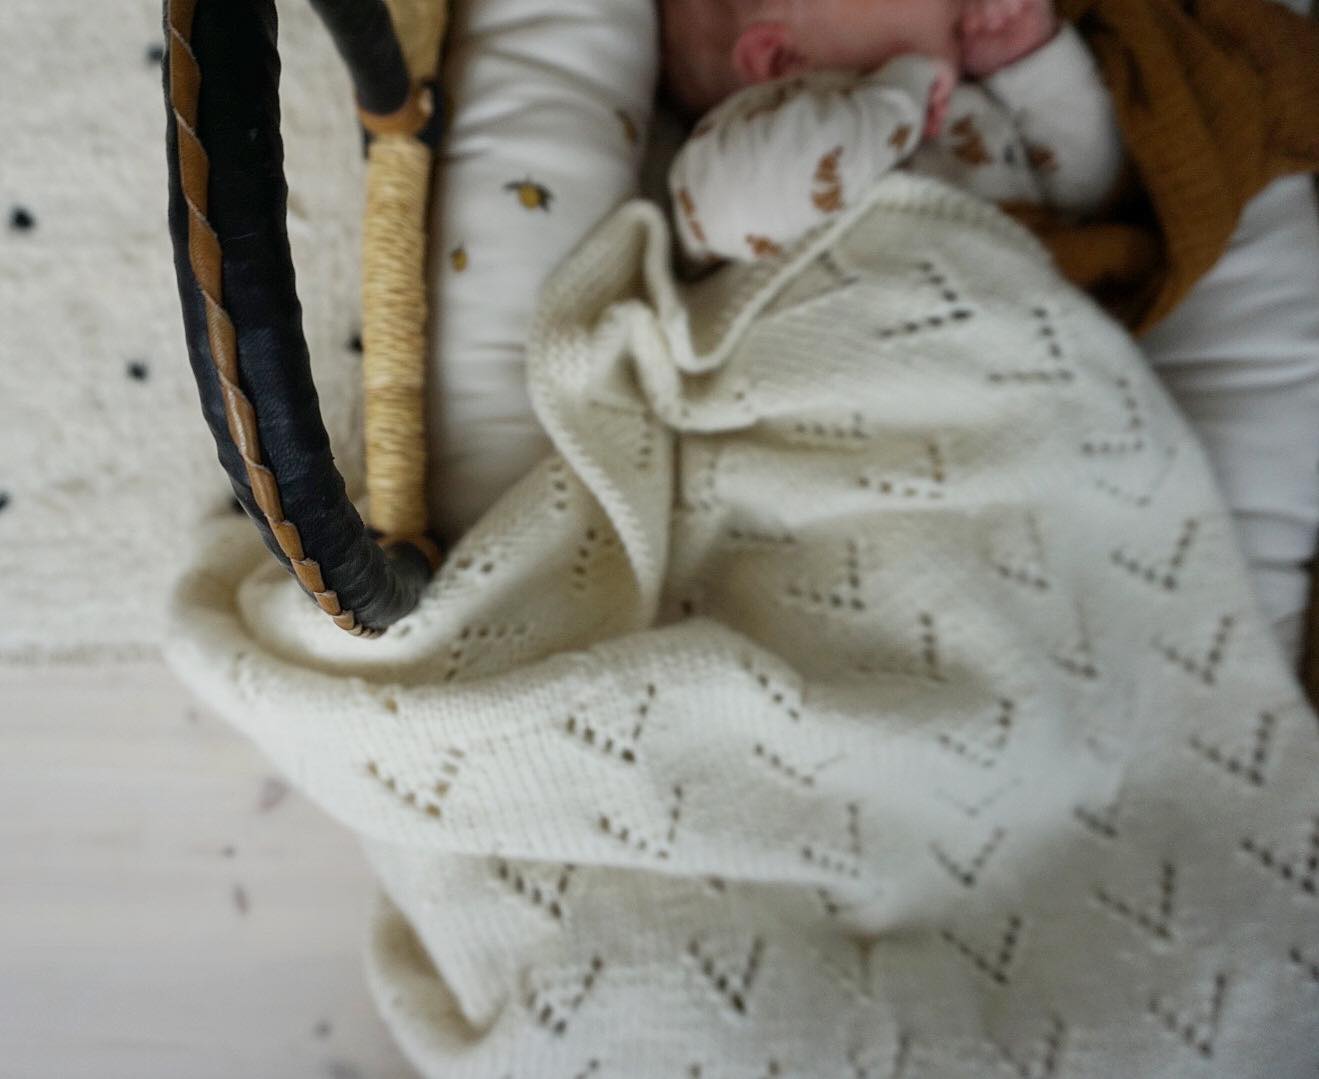  - Bloom blanket | Knitted baby blanket | Knitting pattern- by HipKnitShop - 24/11/2020